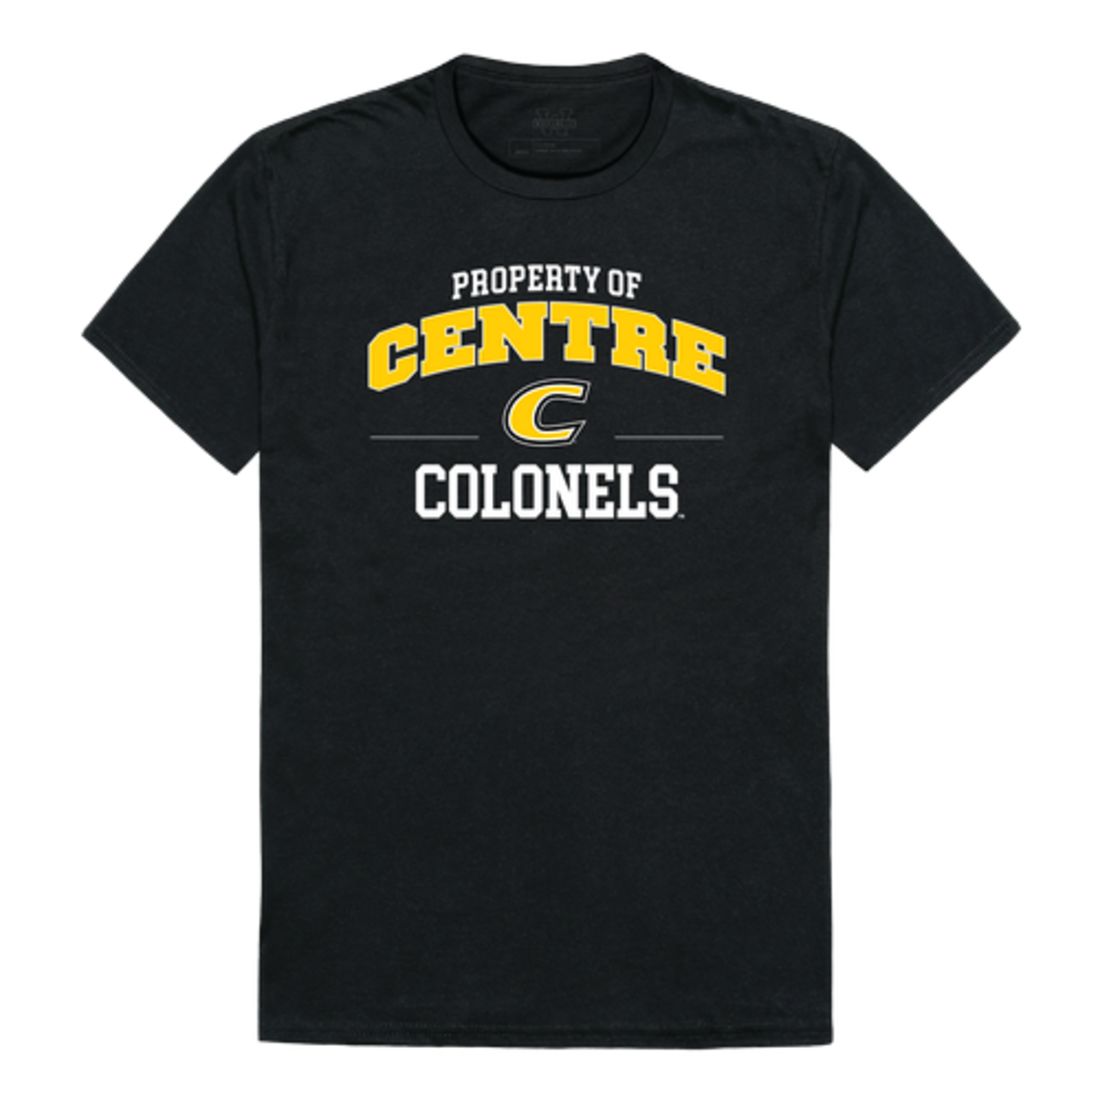 Centre College Colonels Property T-Shirt